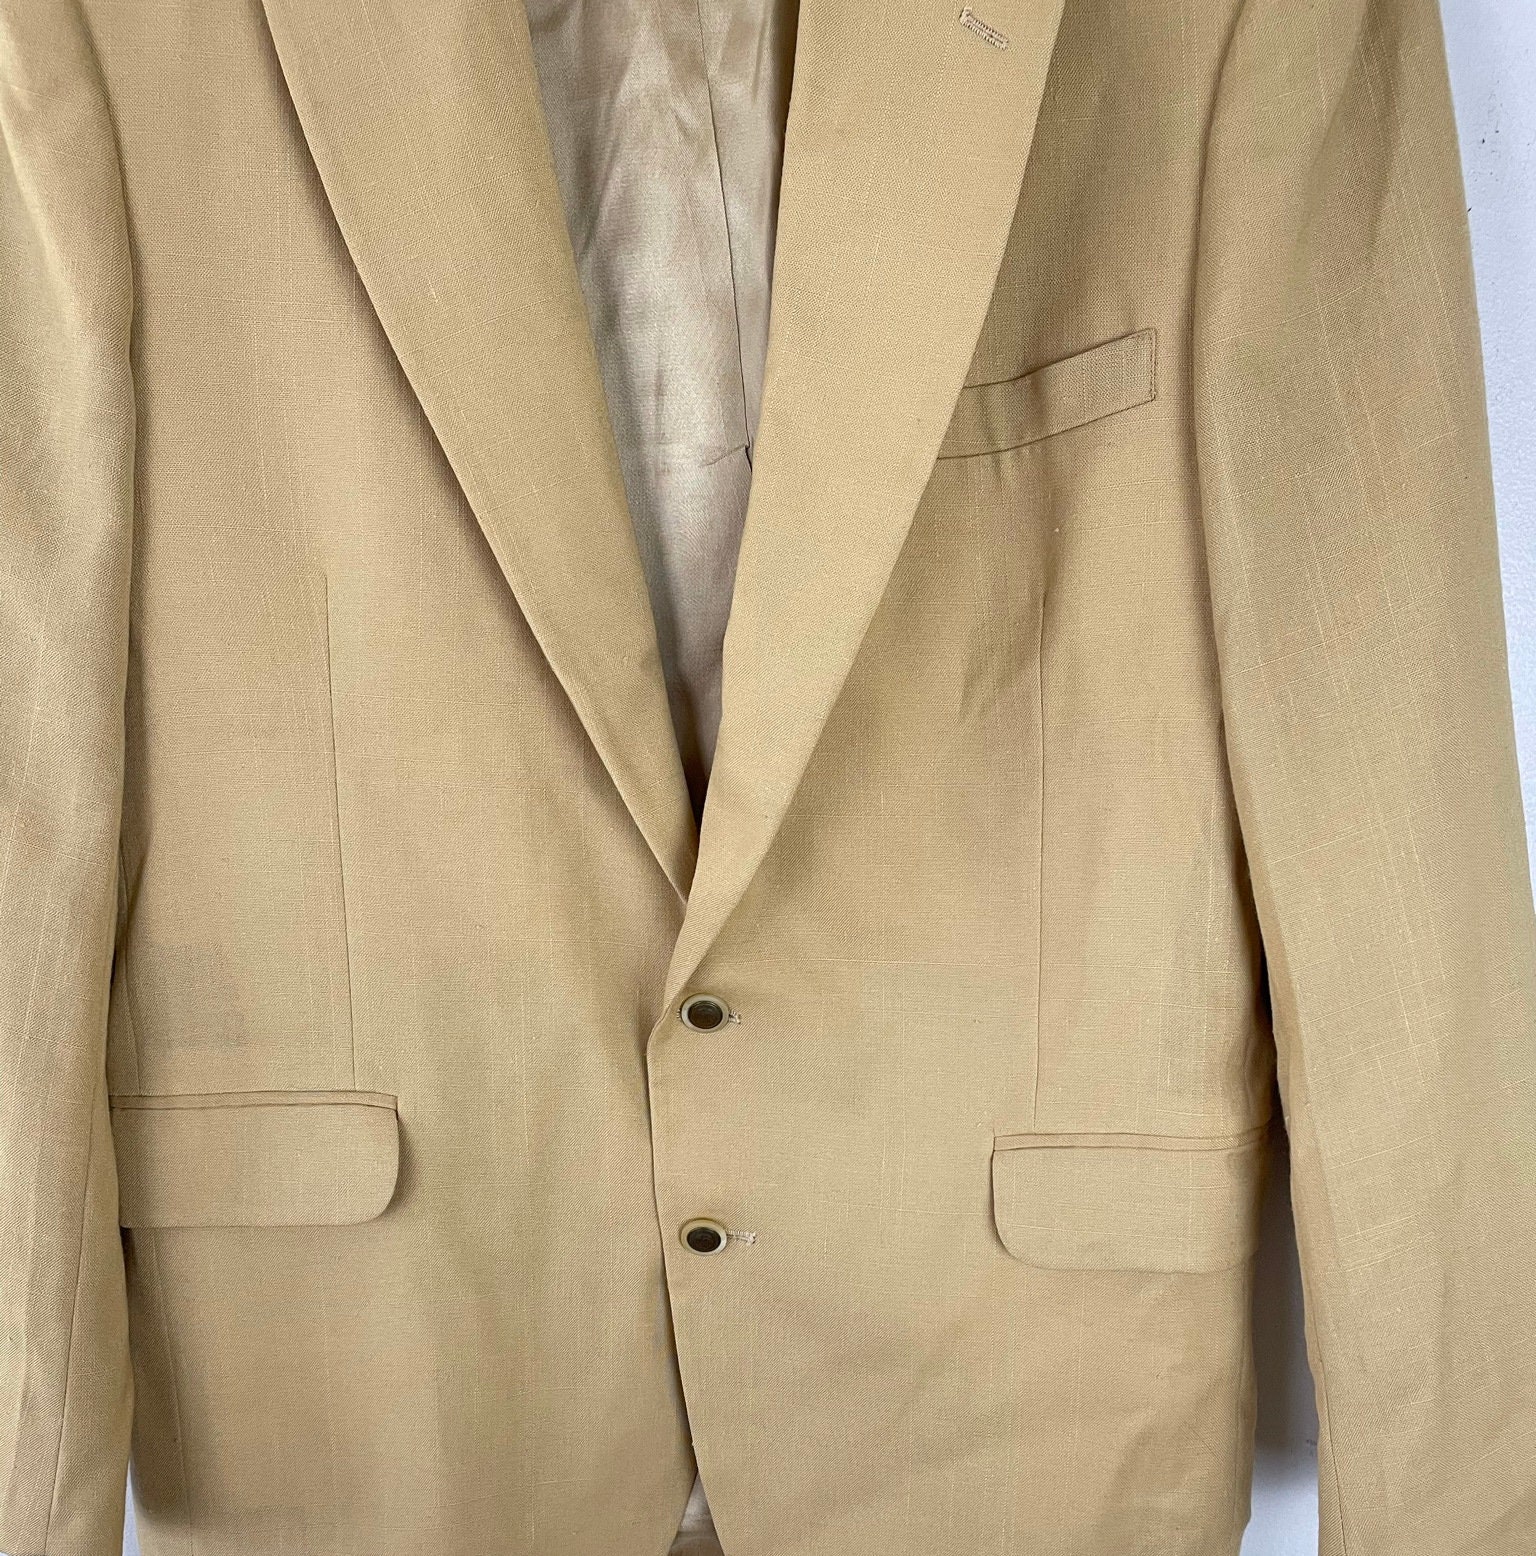 Vintage Tan Sport Coat Mens Size 44L 1980s Academy Award - Etsy